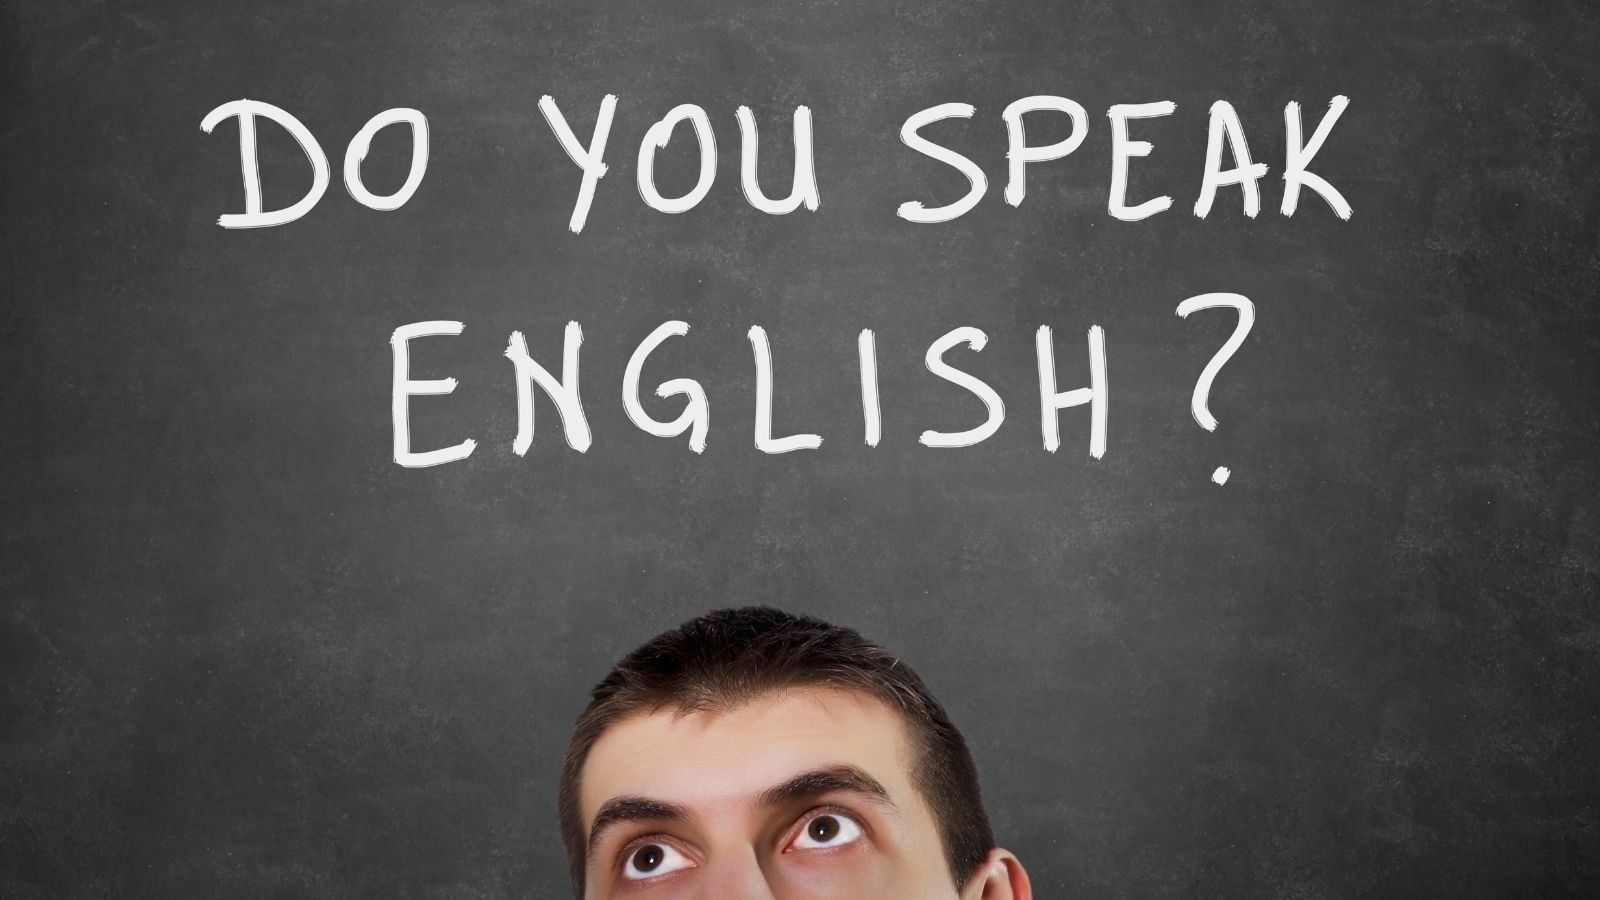 Do you speak good english. Do you speak English. Do you speak English иконка. So you speak English фото для канала.